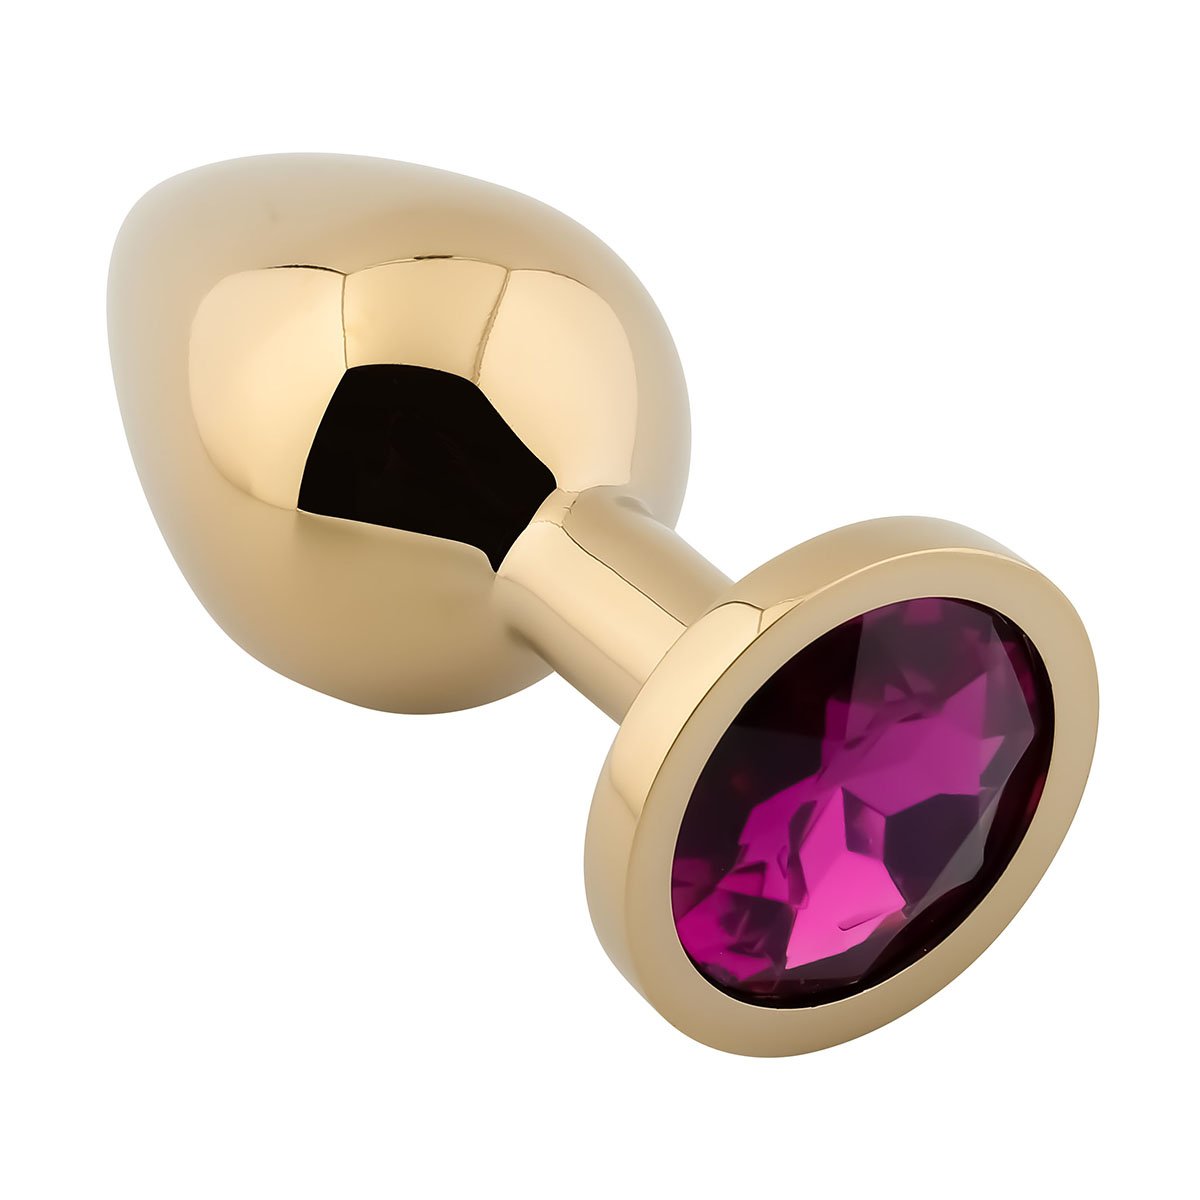 Foto van Banoch - Buttplug Aurora purple gold Small - gouden Metalen buttplug - Diamant steen - paars